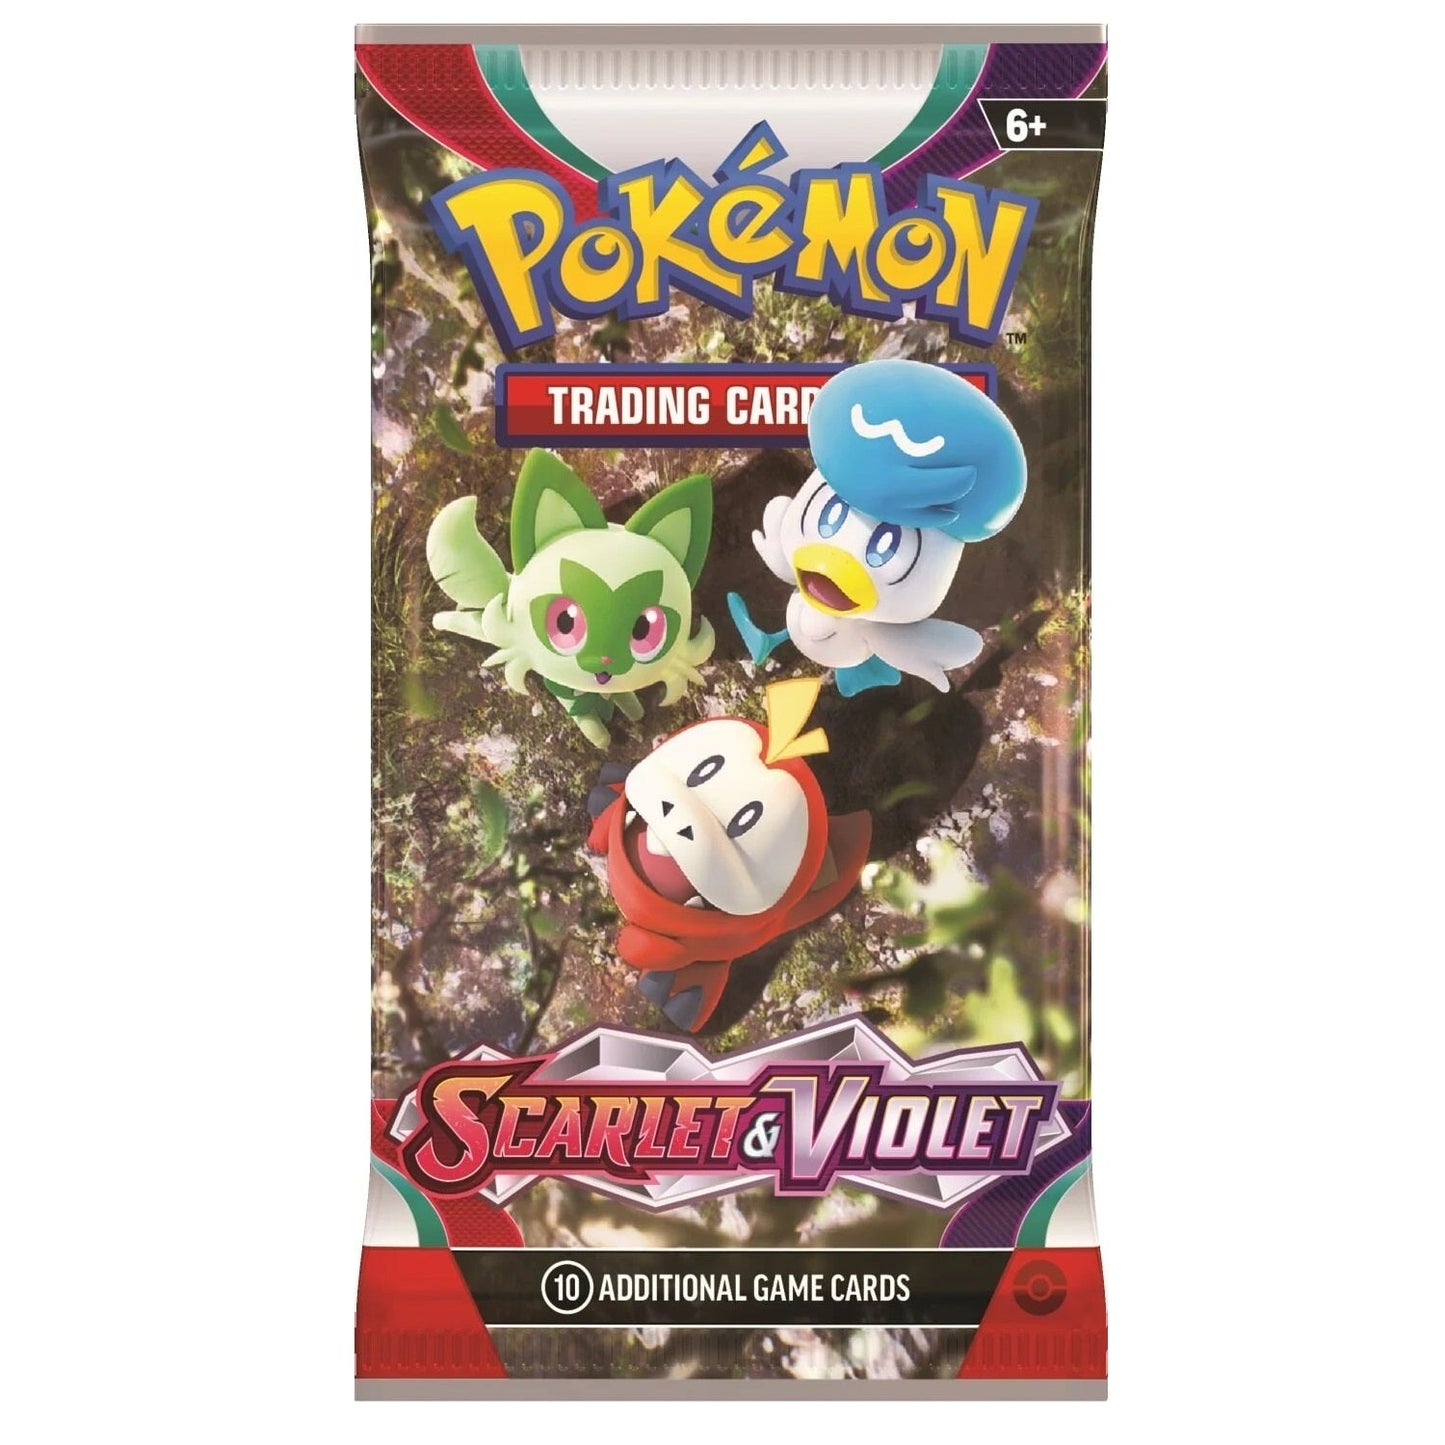 Pokémon TCG - Scarlet & Violet Booster Bundle